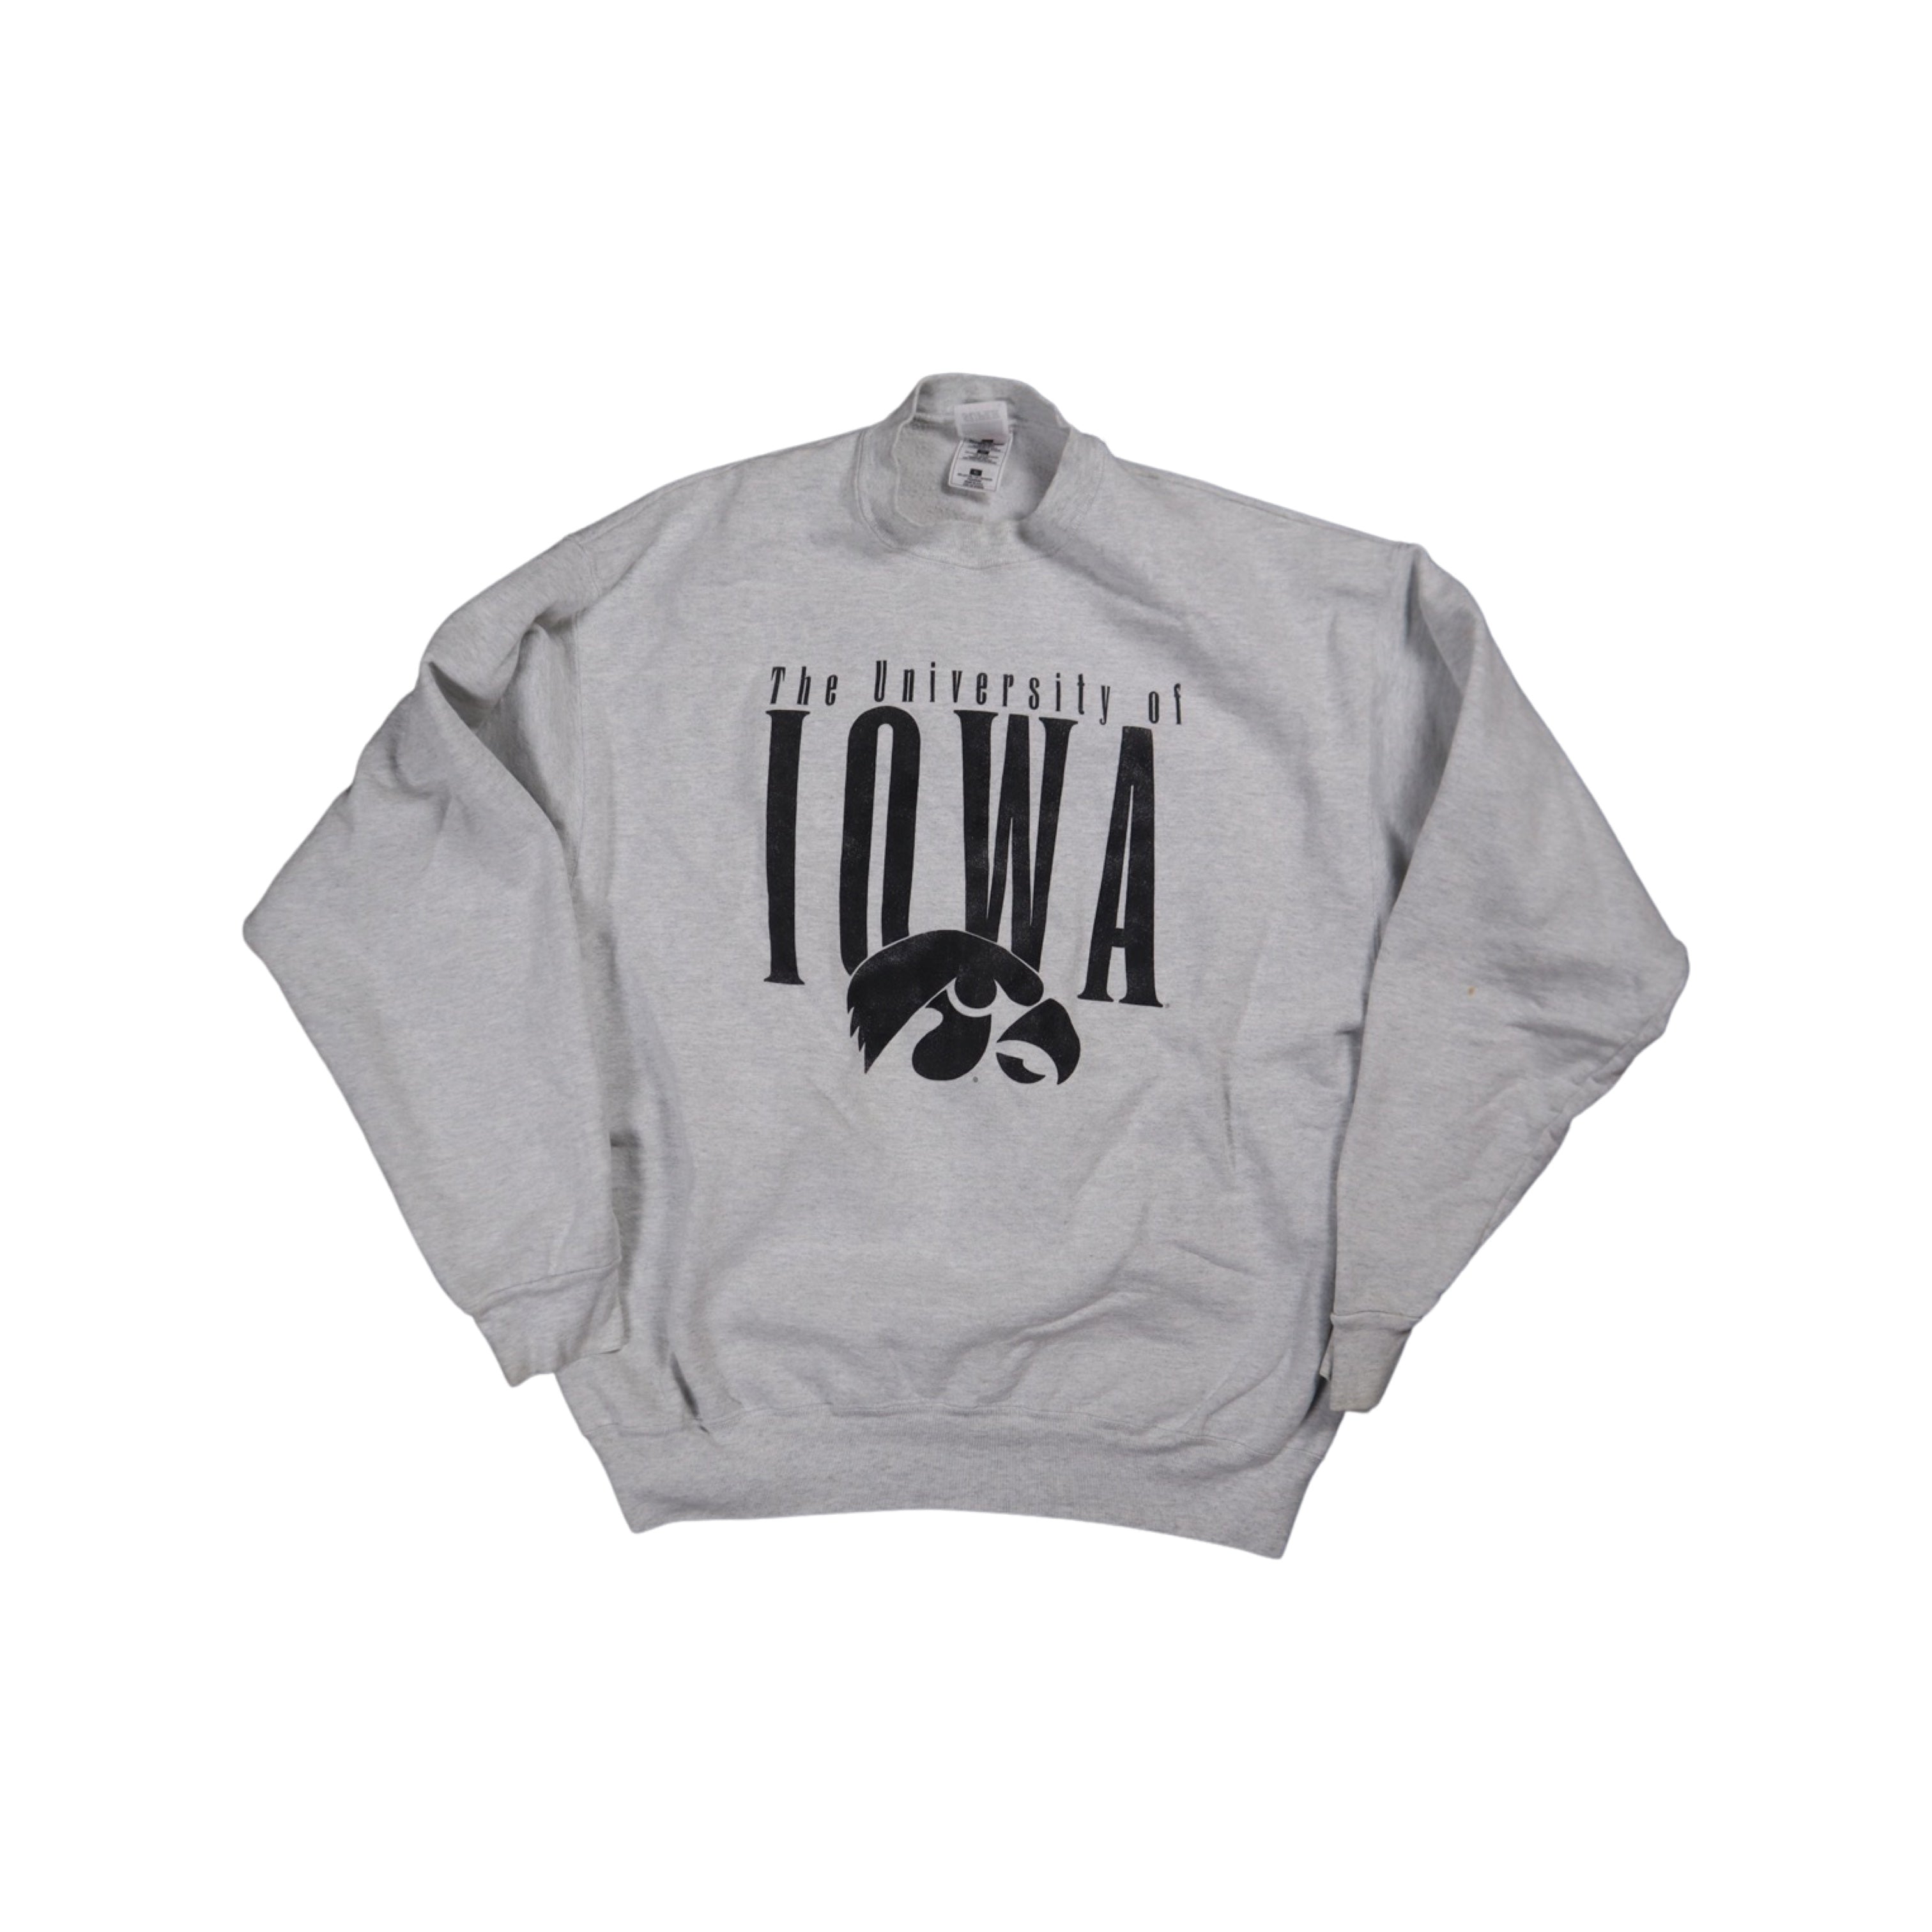 University of Iowa 90s Sweater (XL)